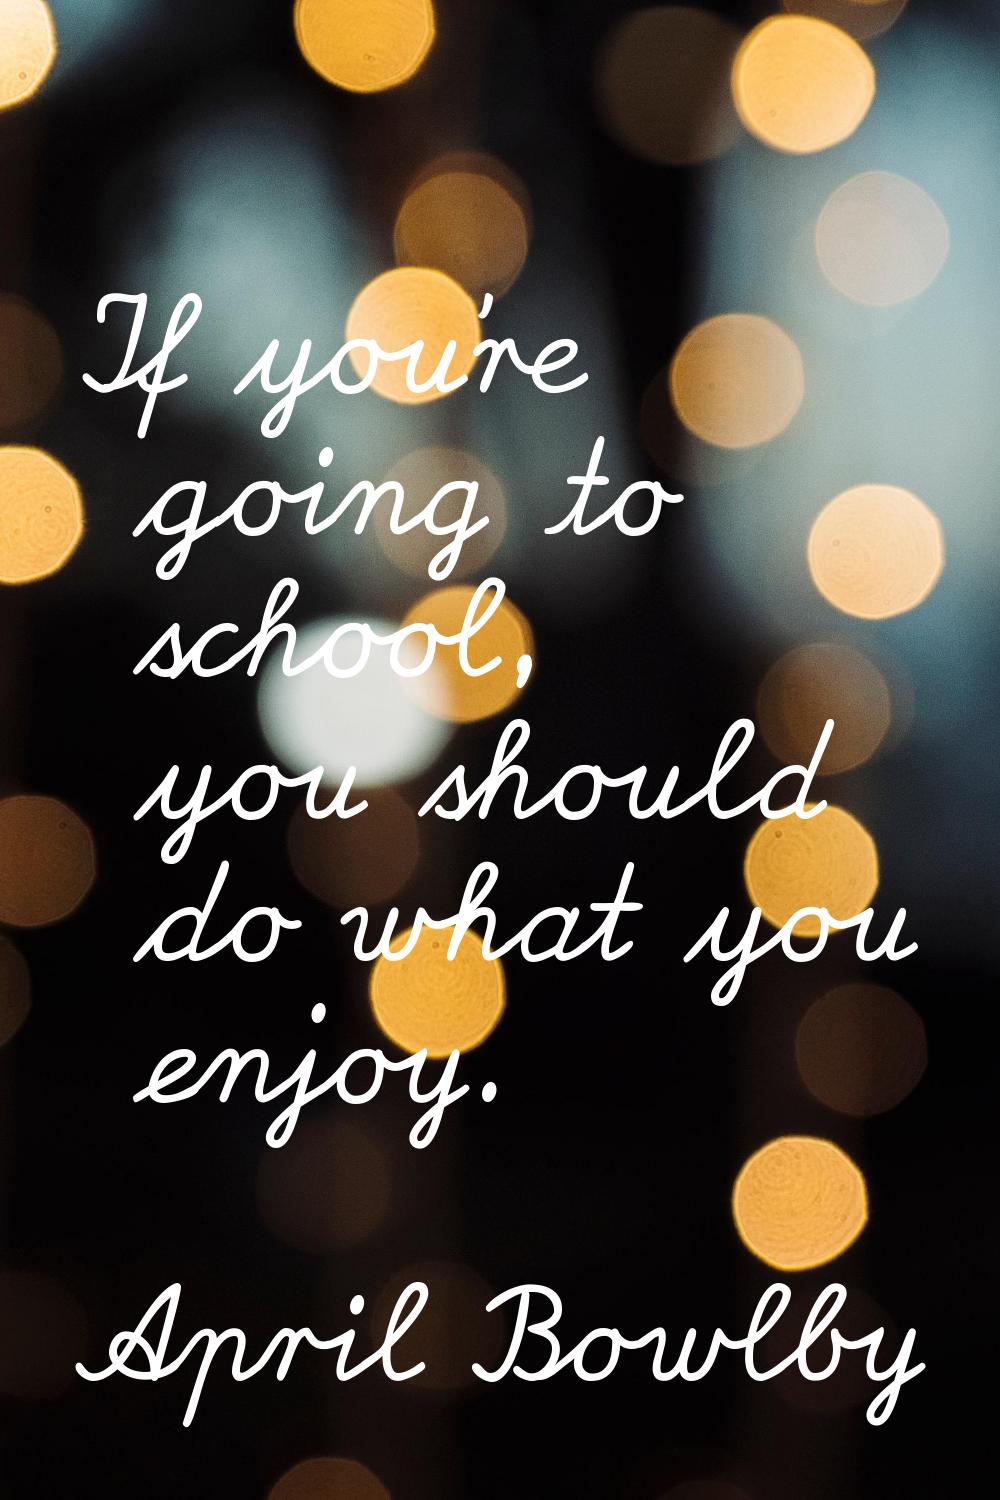 If you're going to school, you should do what you enjoy.